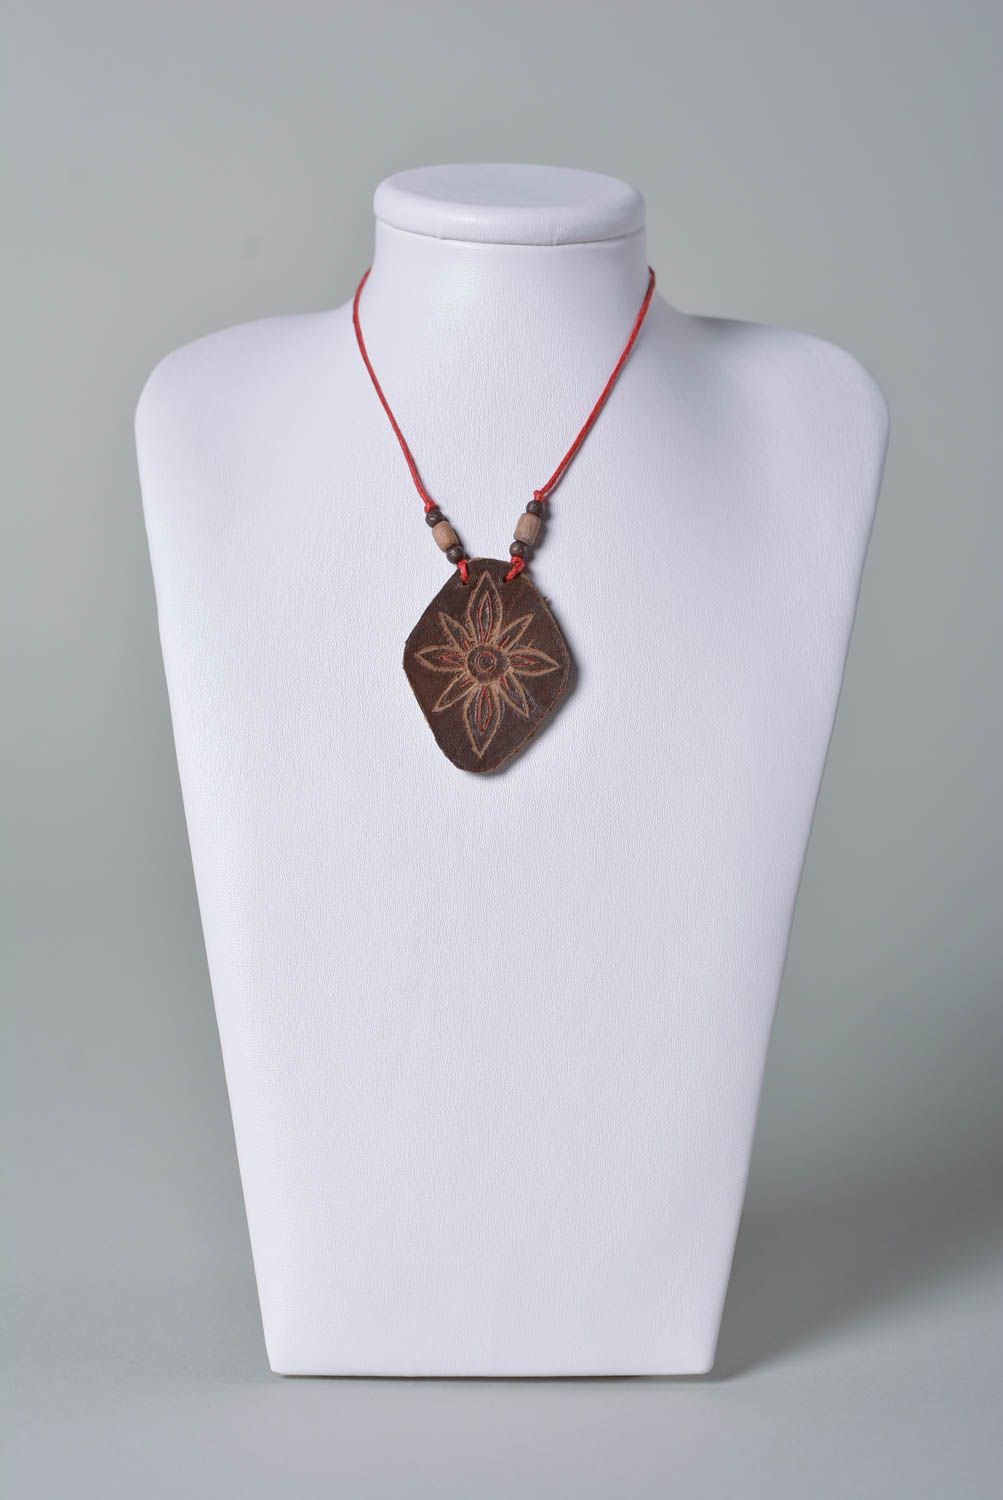 Handmade pendant leather necklace unusual pendant designer accessory gift ideas photo 2